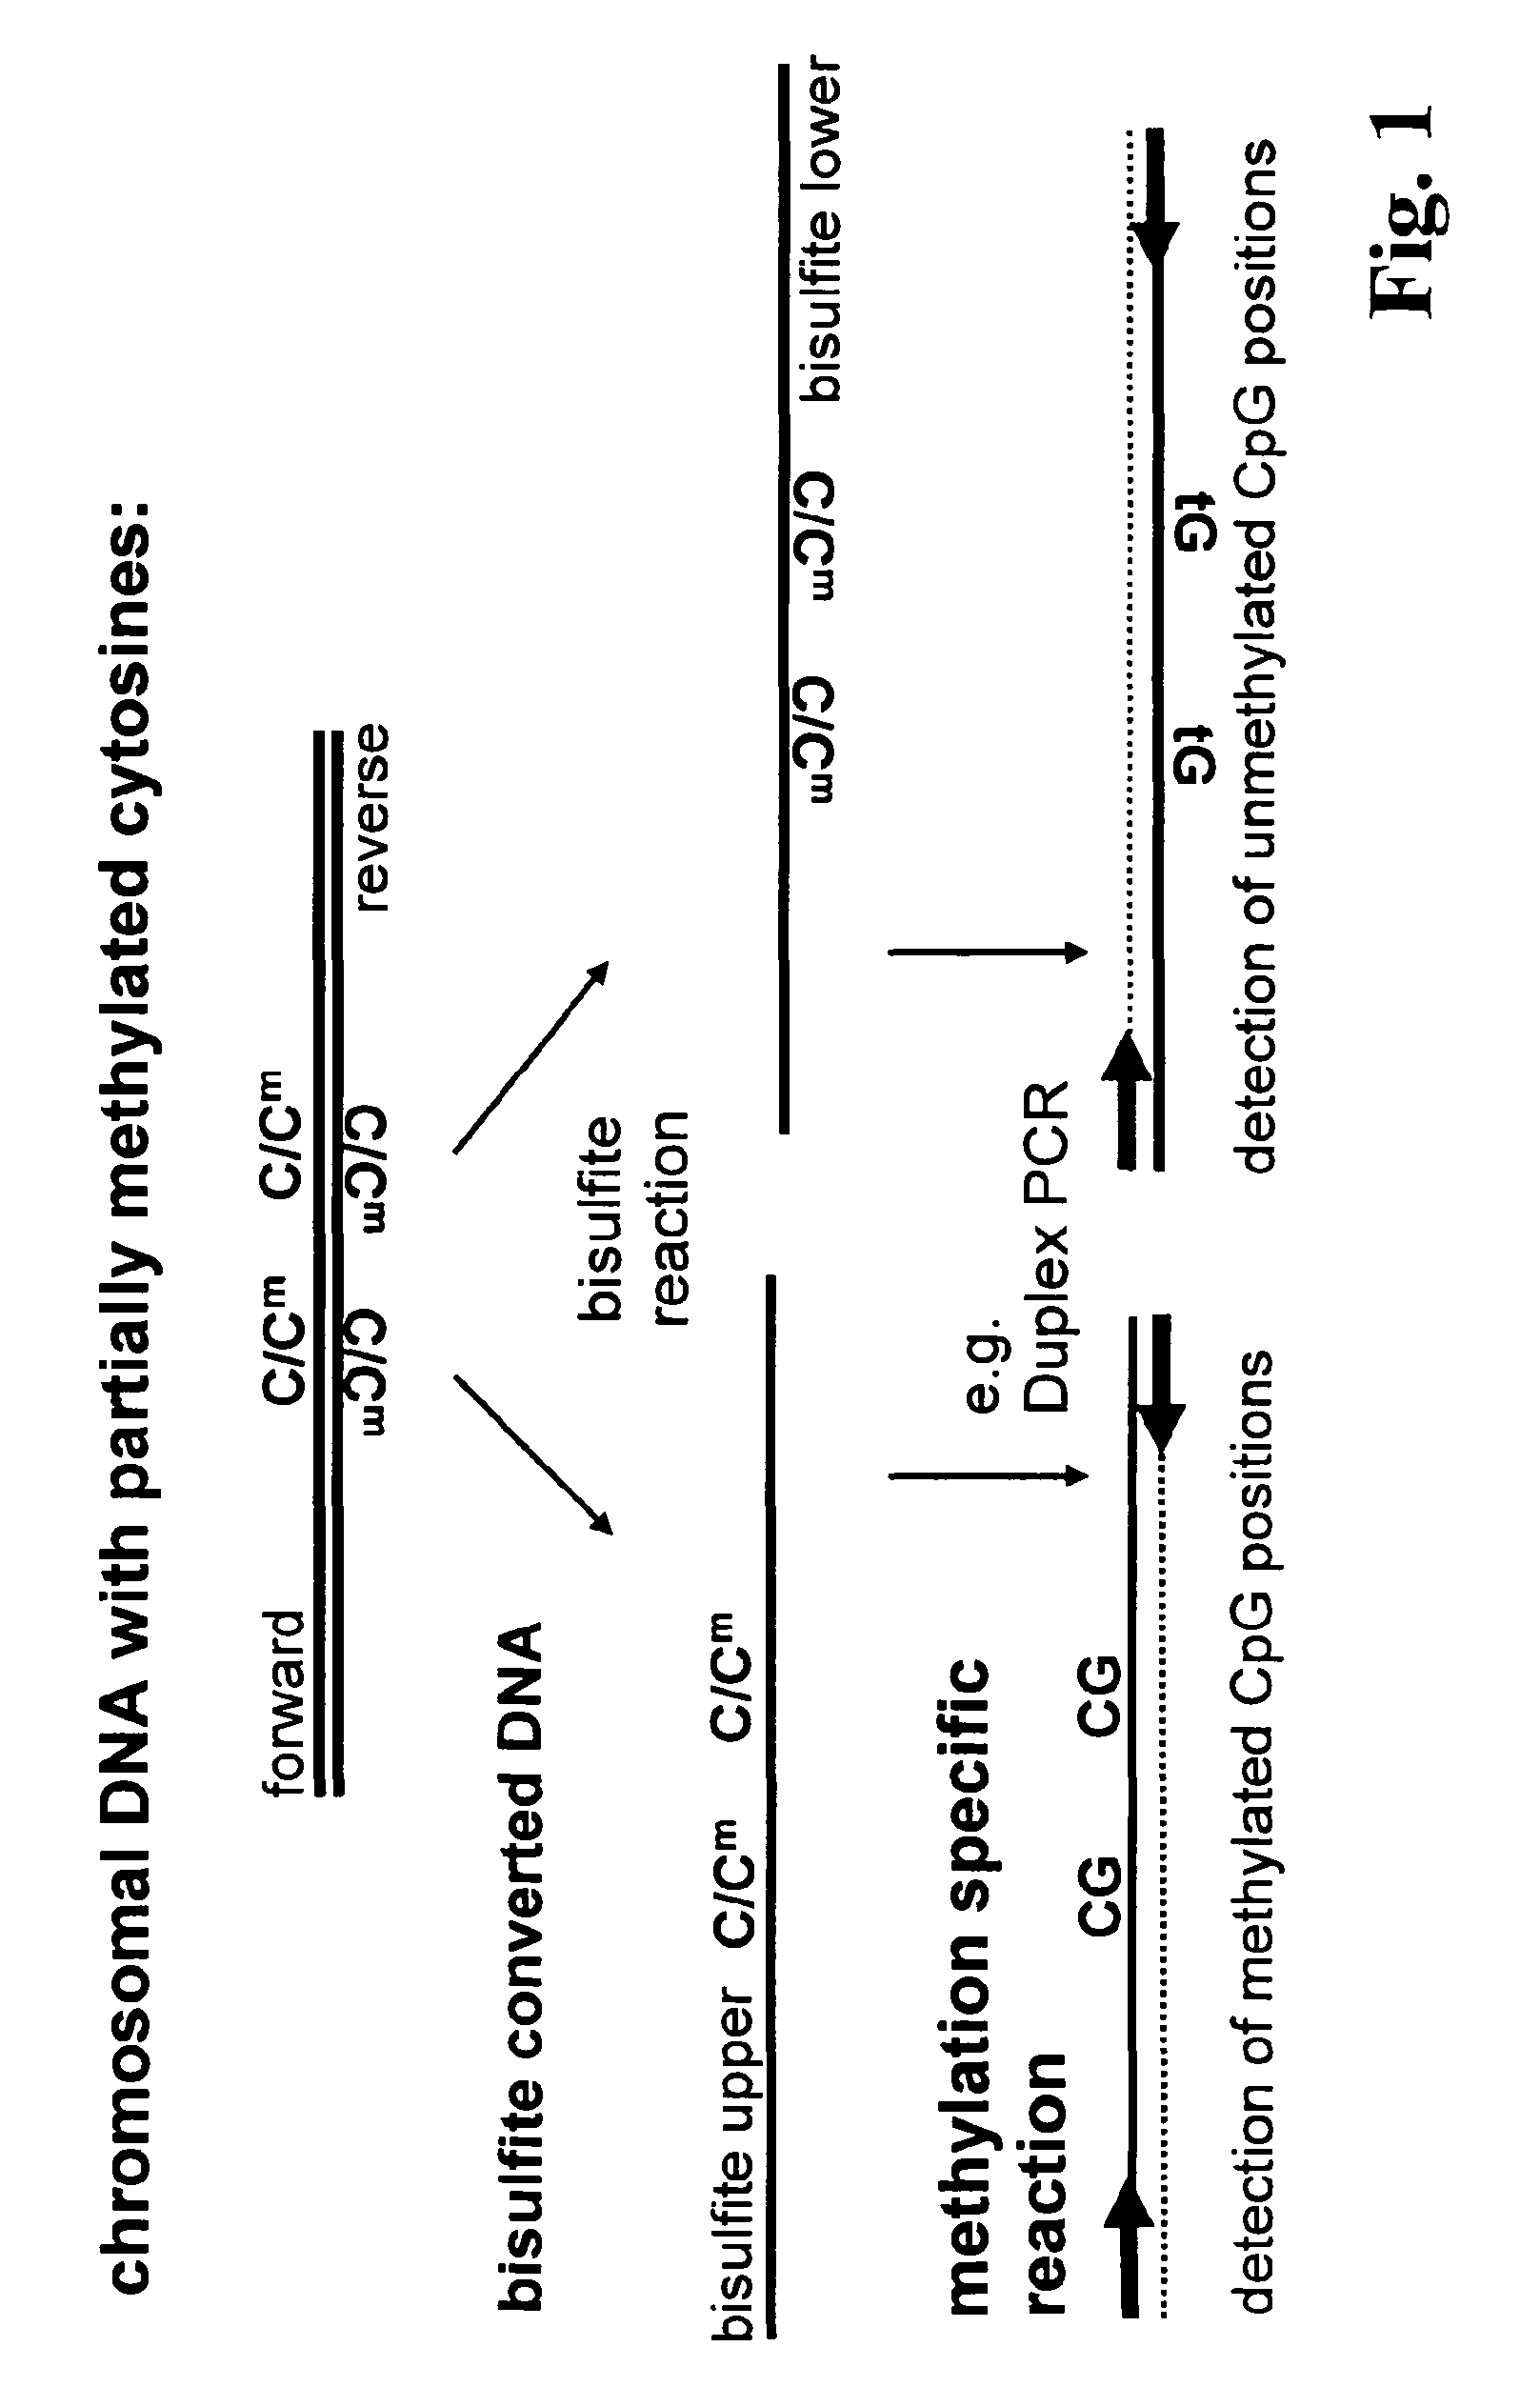 Method for methylation analysis of nucleic acid